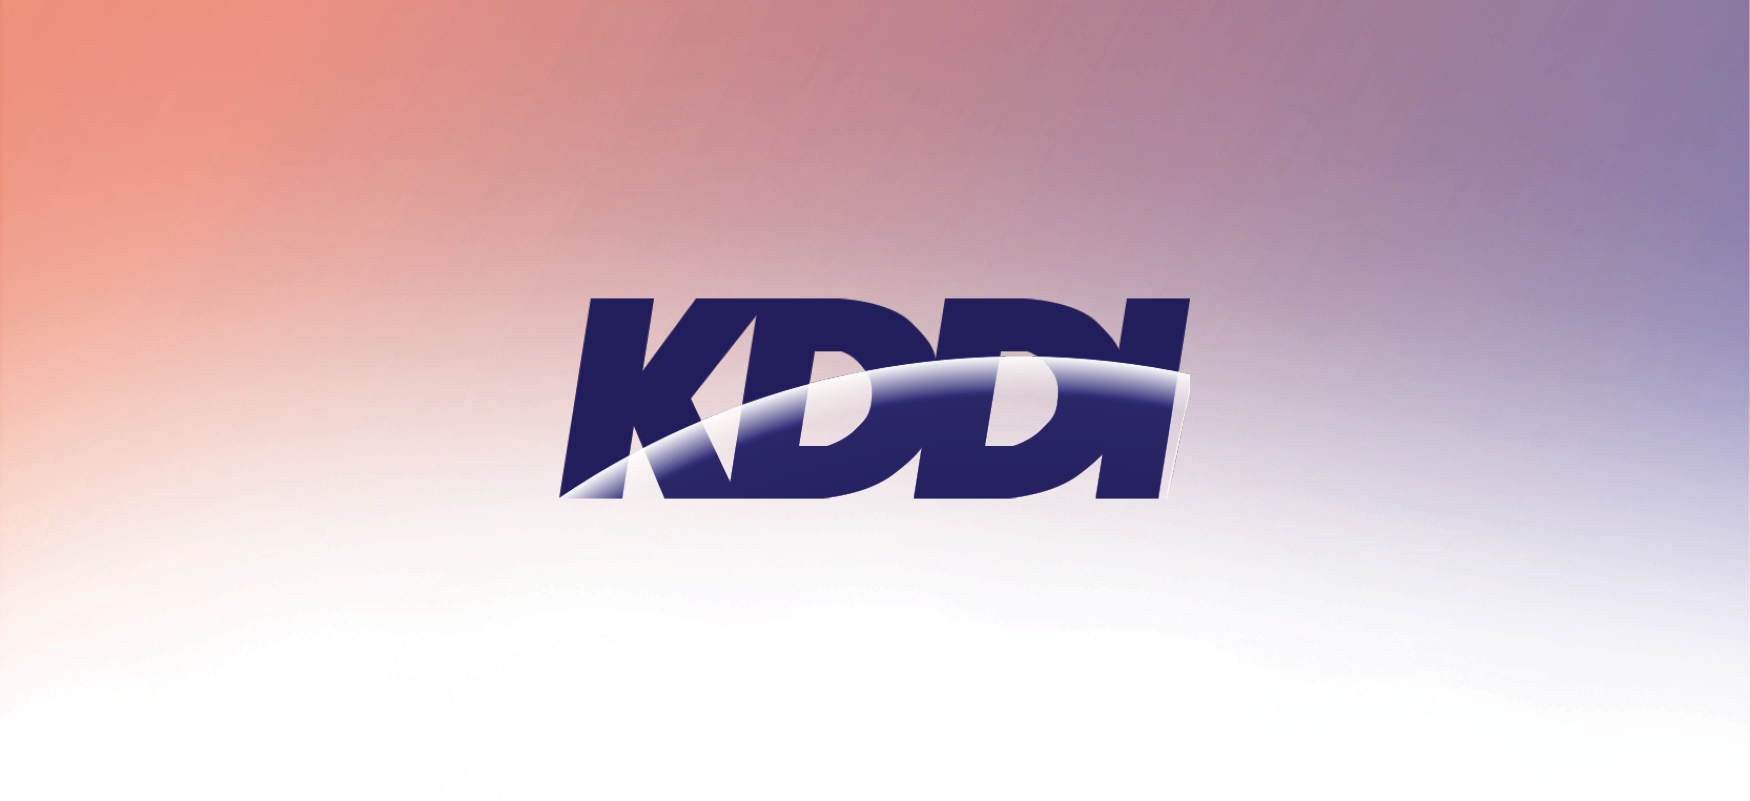 KDDI Selects Epsilon for Enterprise Connectivity in Hong Kong and Singapore